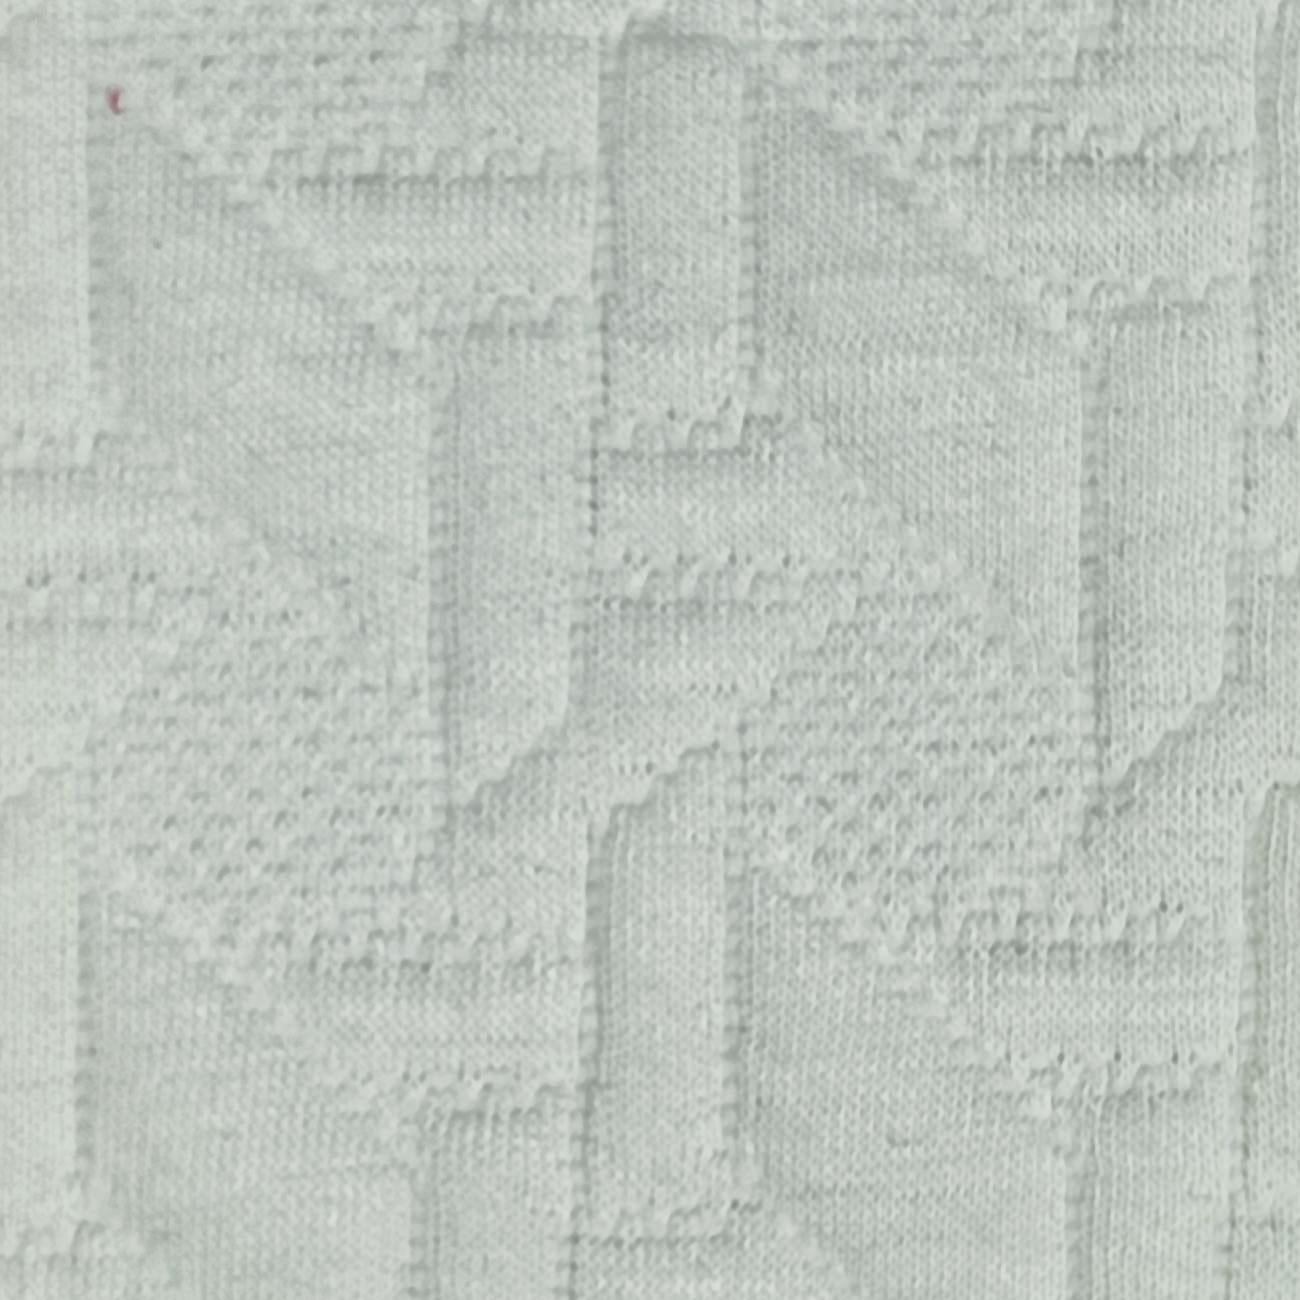 Jacquard T/R/S Knit | FAB1248 | 1.Ivory, 2.Black by Fabricis.com #